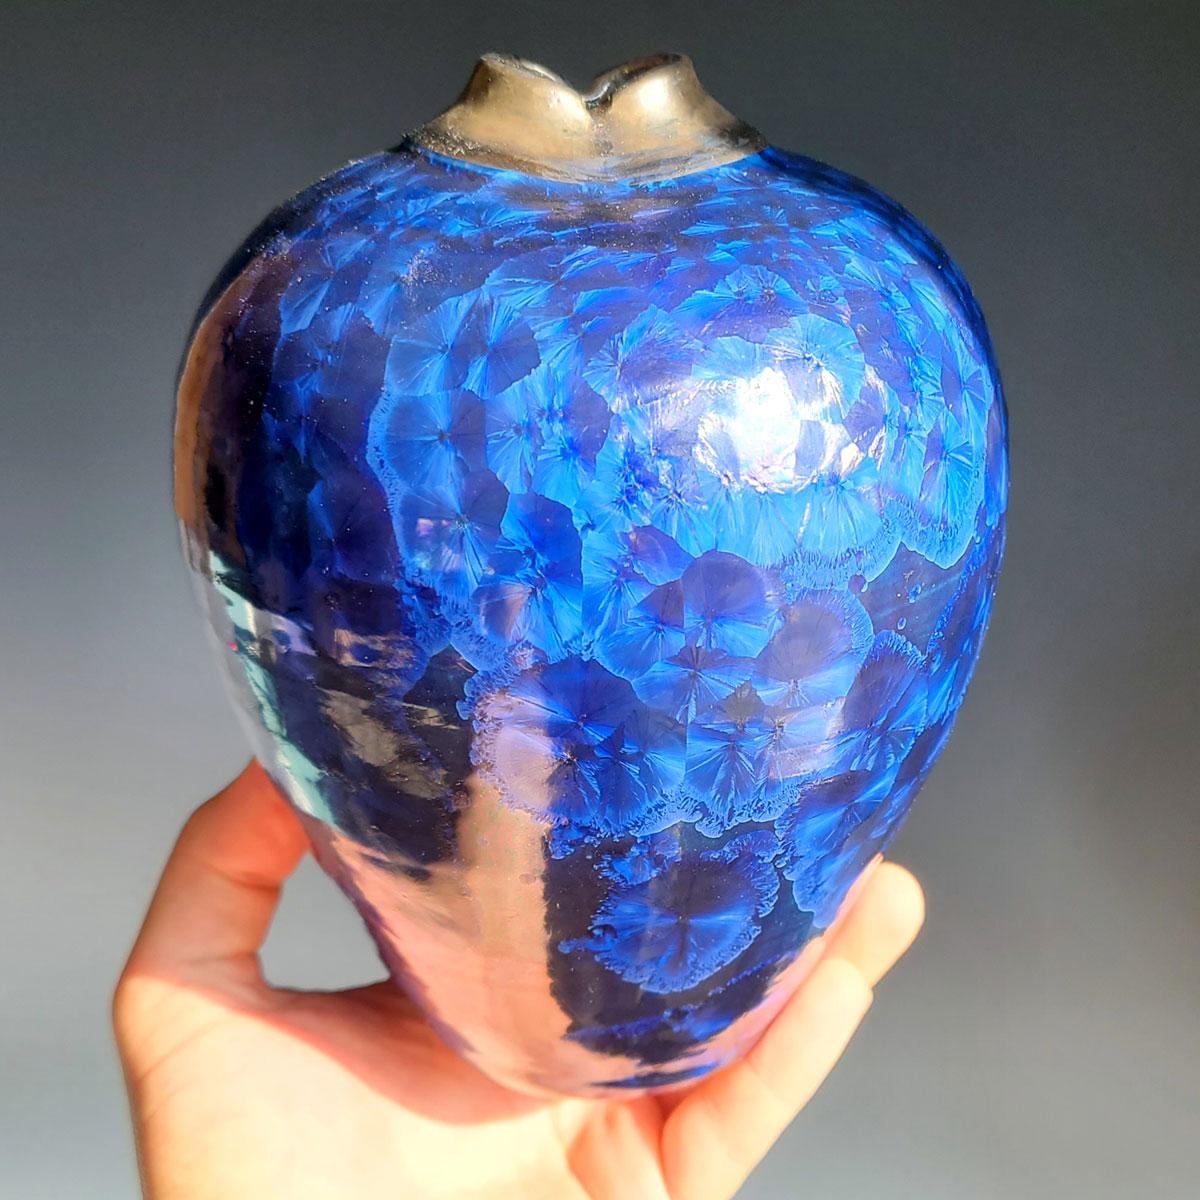 Jon Puzzuoli Abstract Sculpture - "Queen Exosphere" Ceramic Sculptural Vase